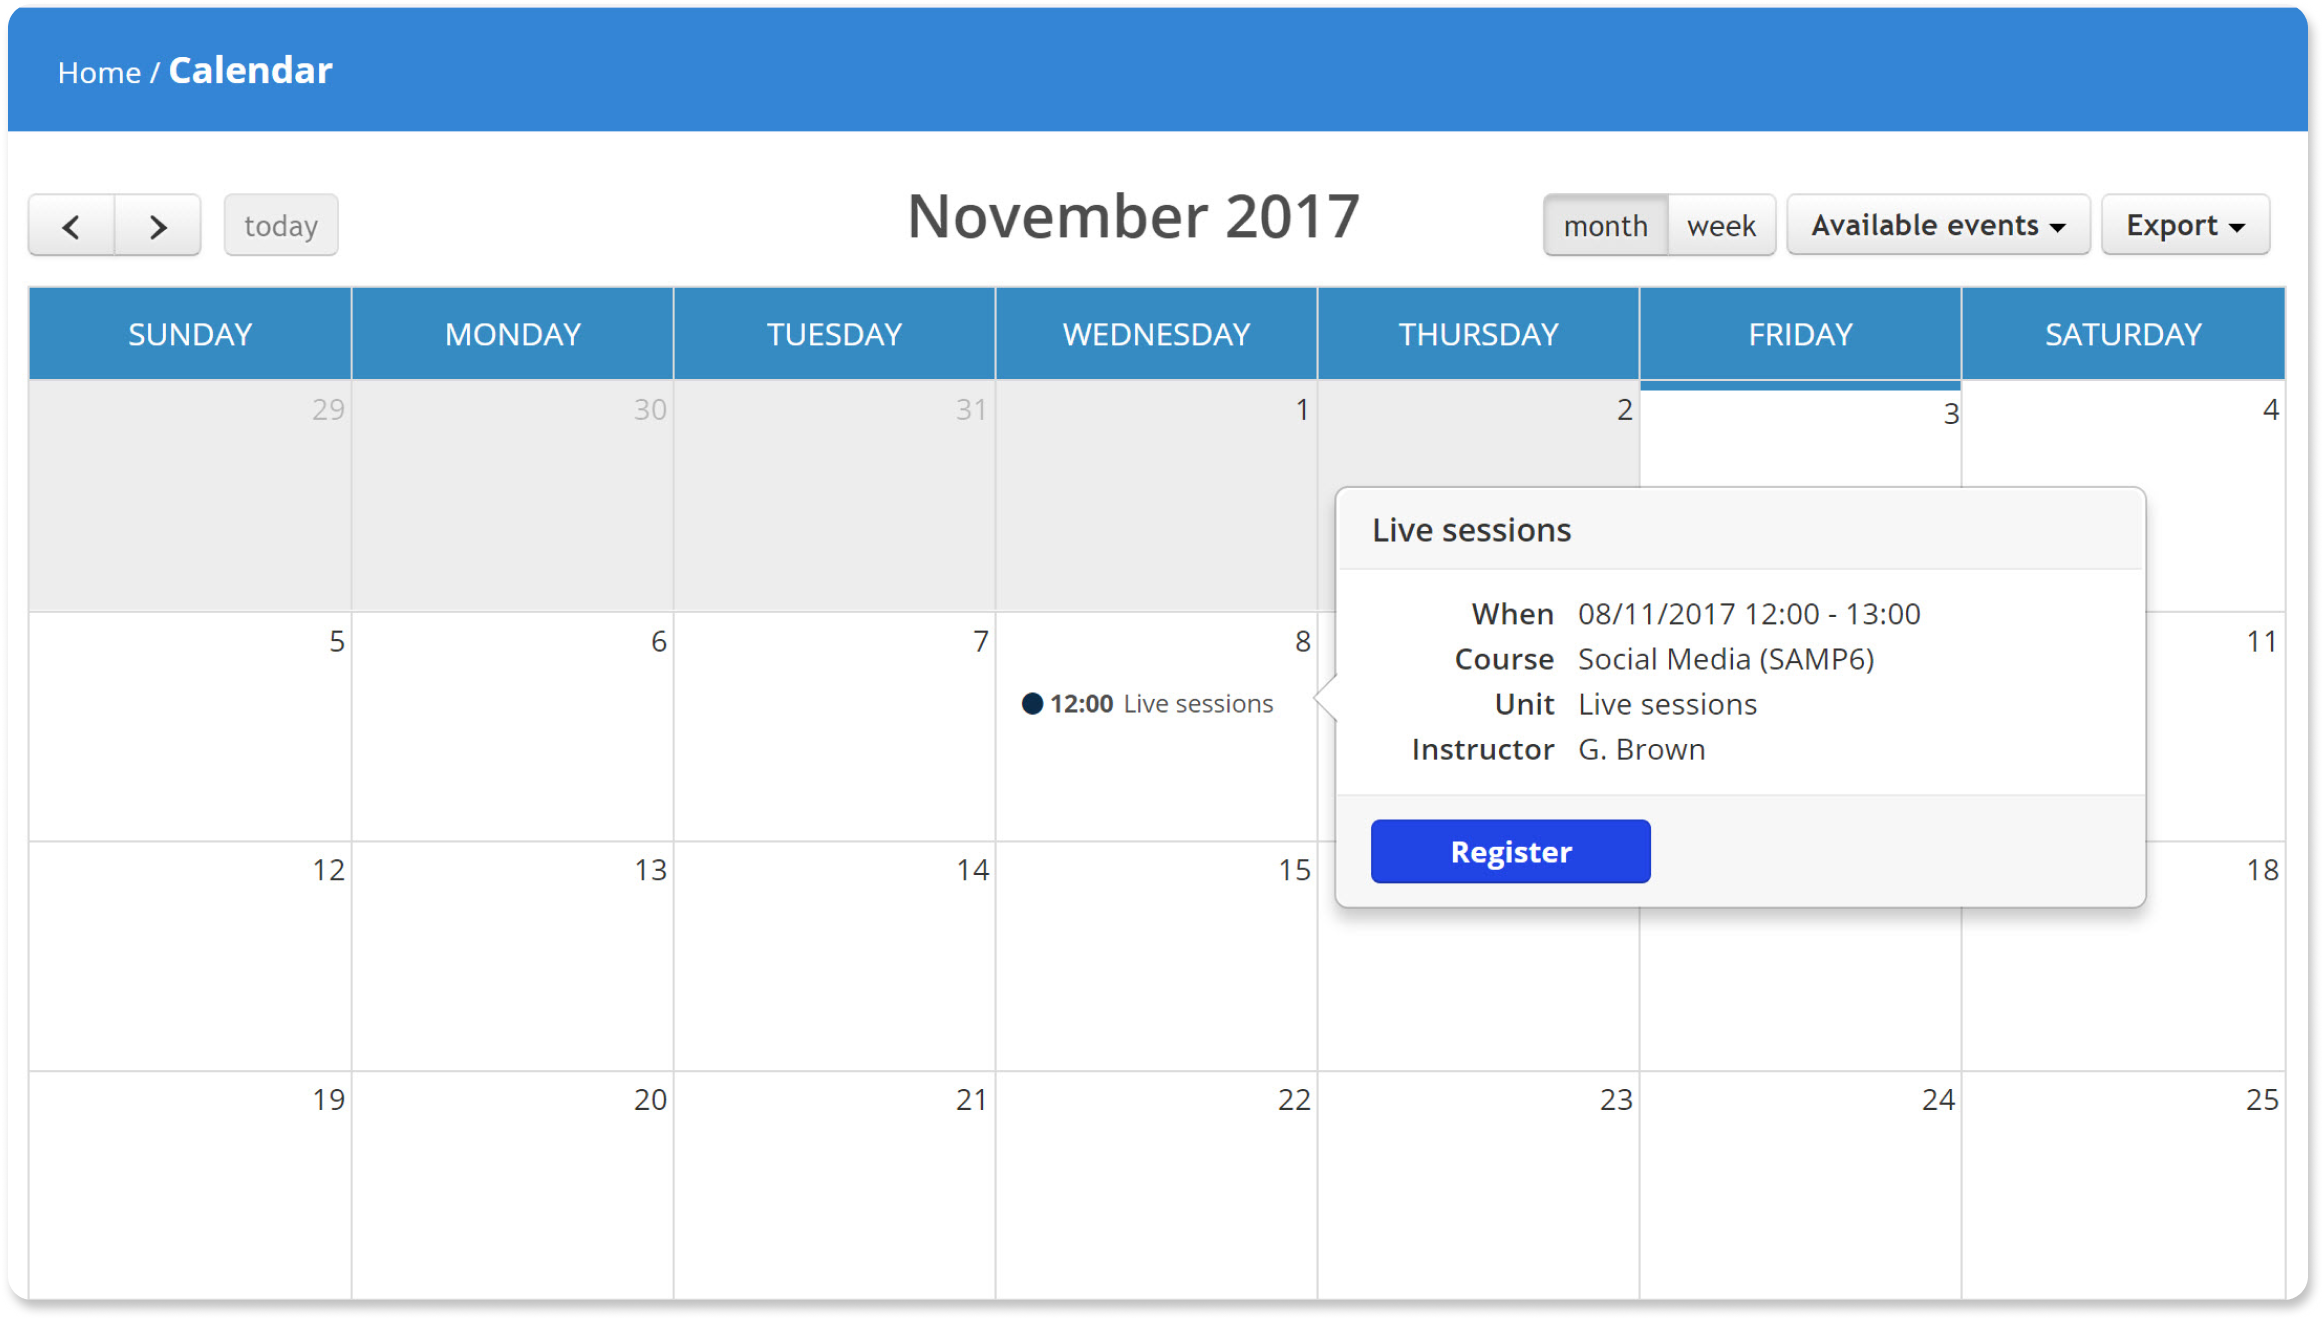 User Register To ILT Event From Calendar - TalentLMS Blog